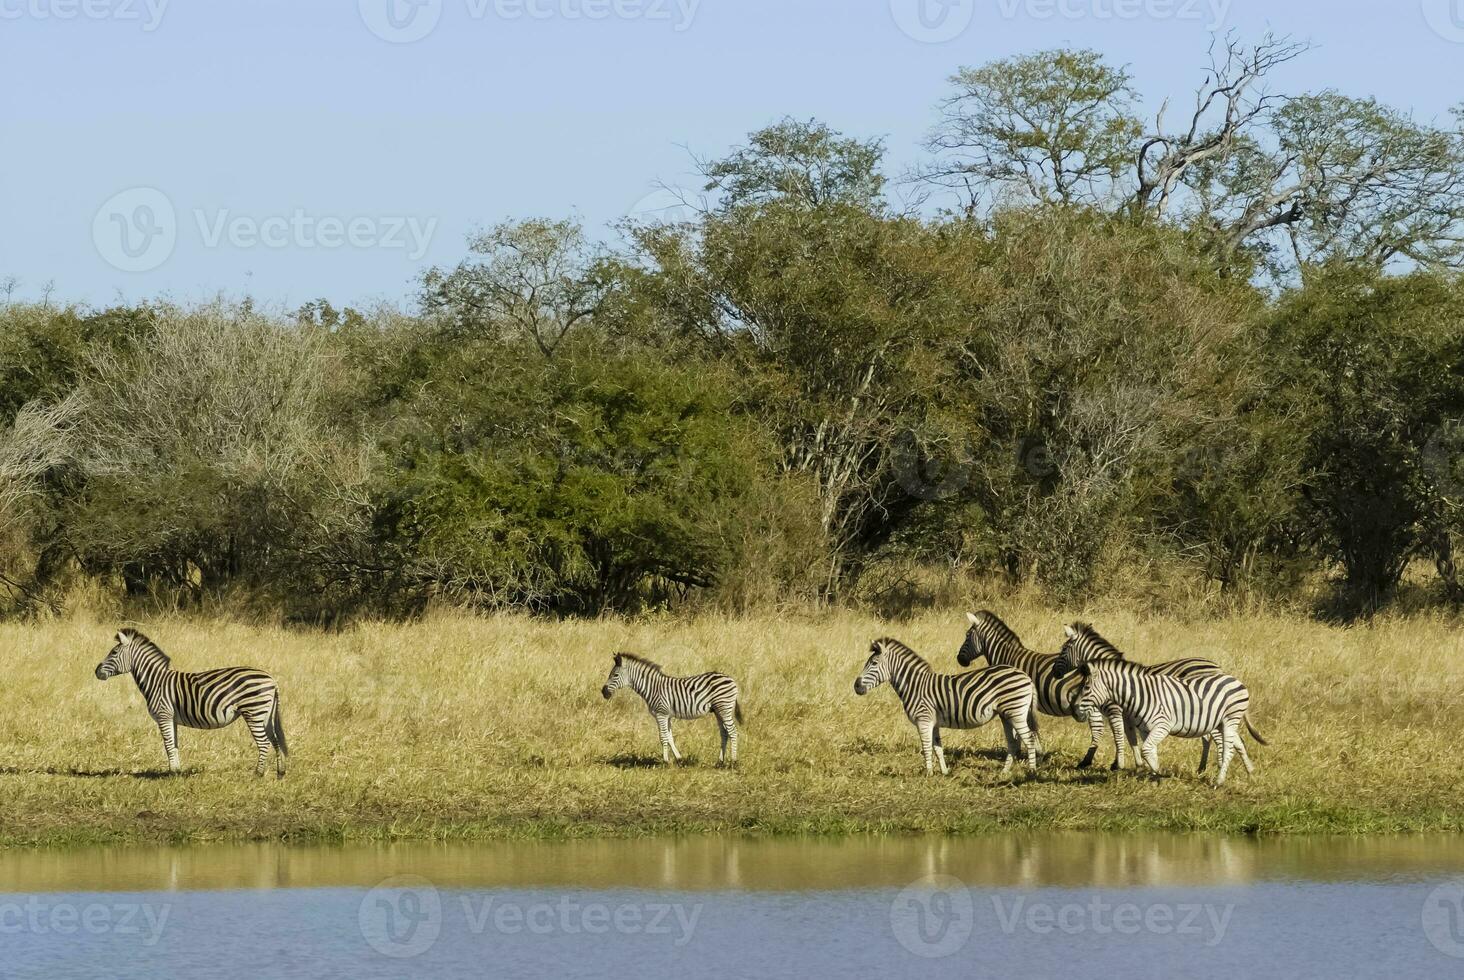 hermosa cebras en África foto